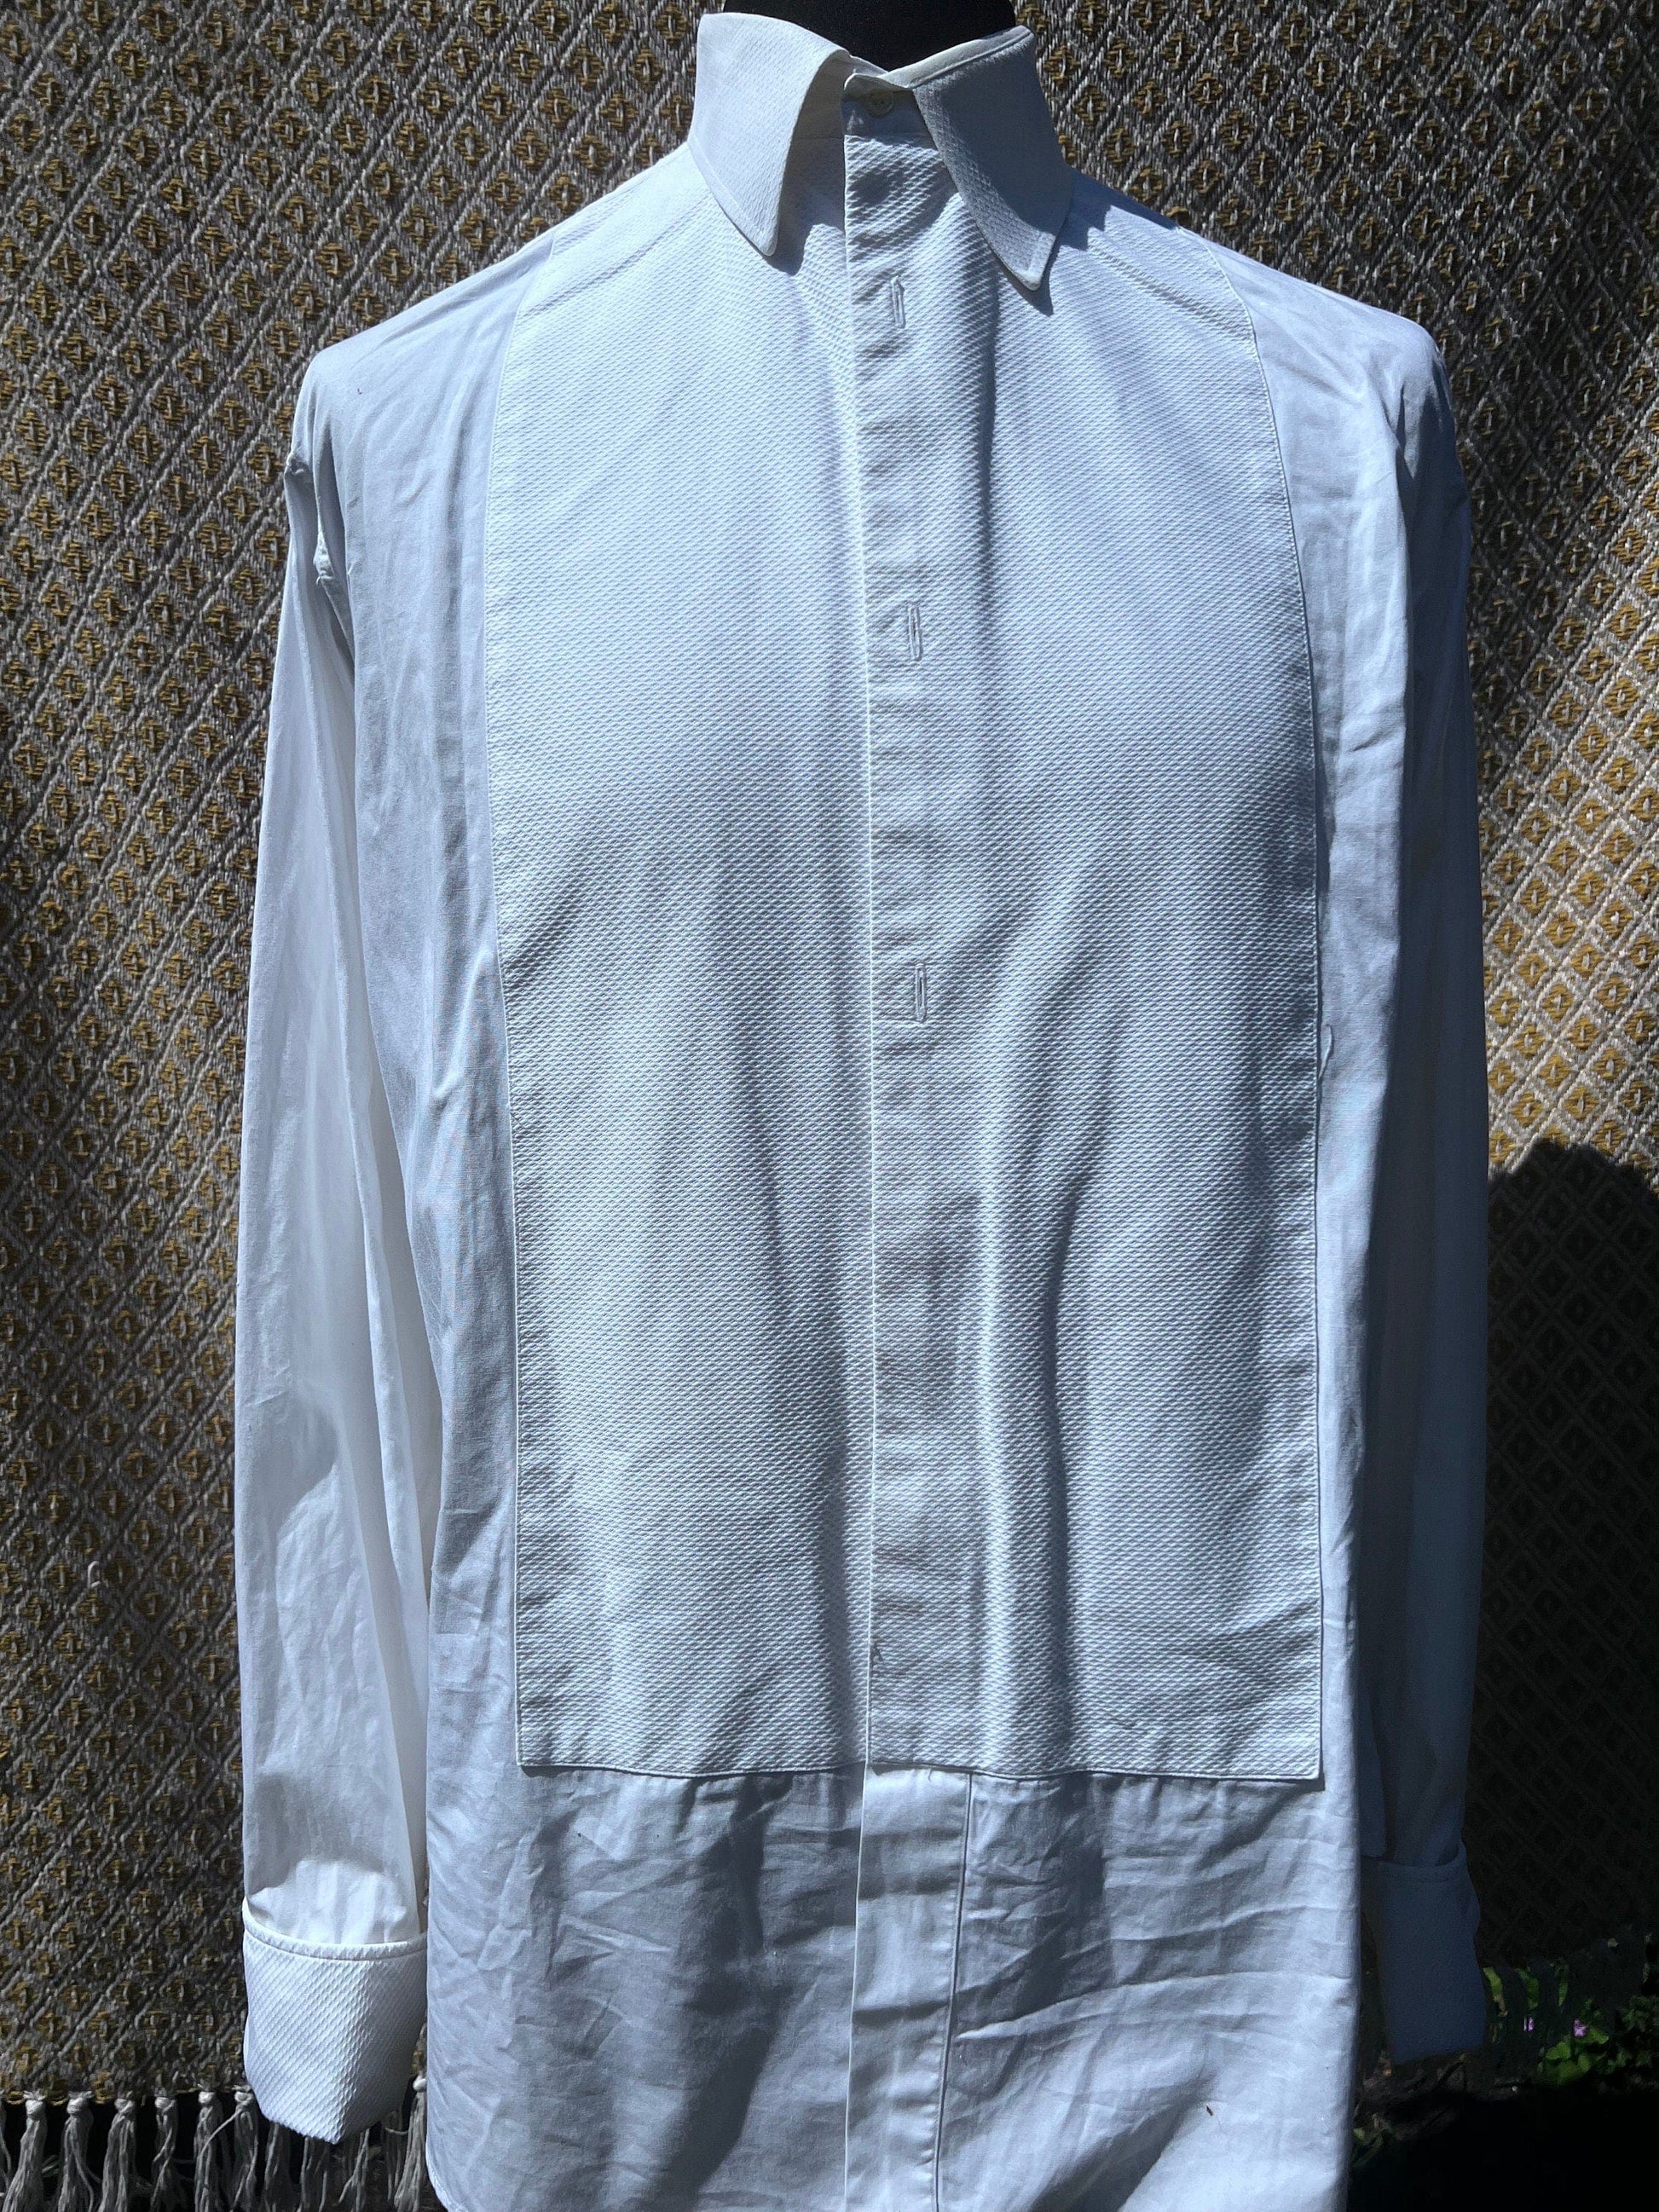 Vintage 1960s Dress Shirt Hall Brothers, Oxford White waffle, Tuxedo Shirt , vintage dress shirt, vintage shirt, men’s shirt 16.5” 42”